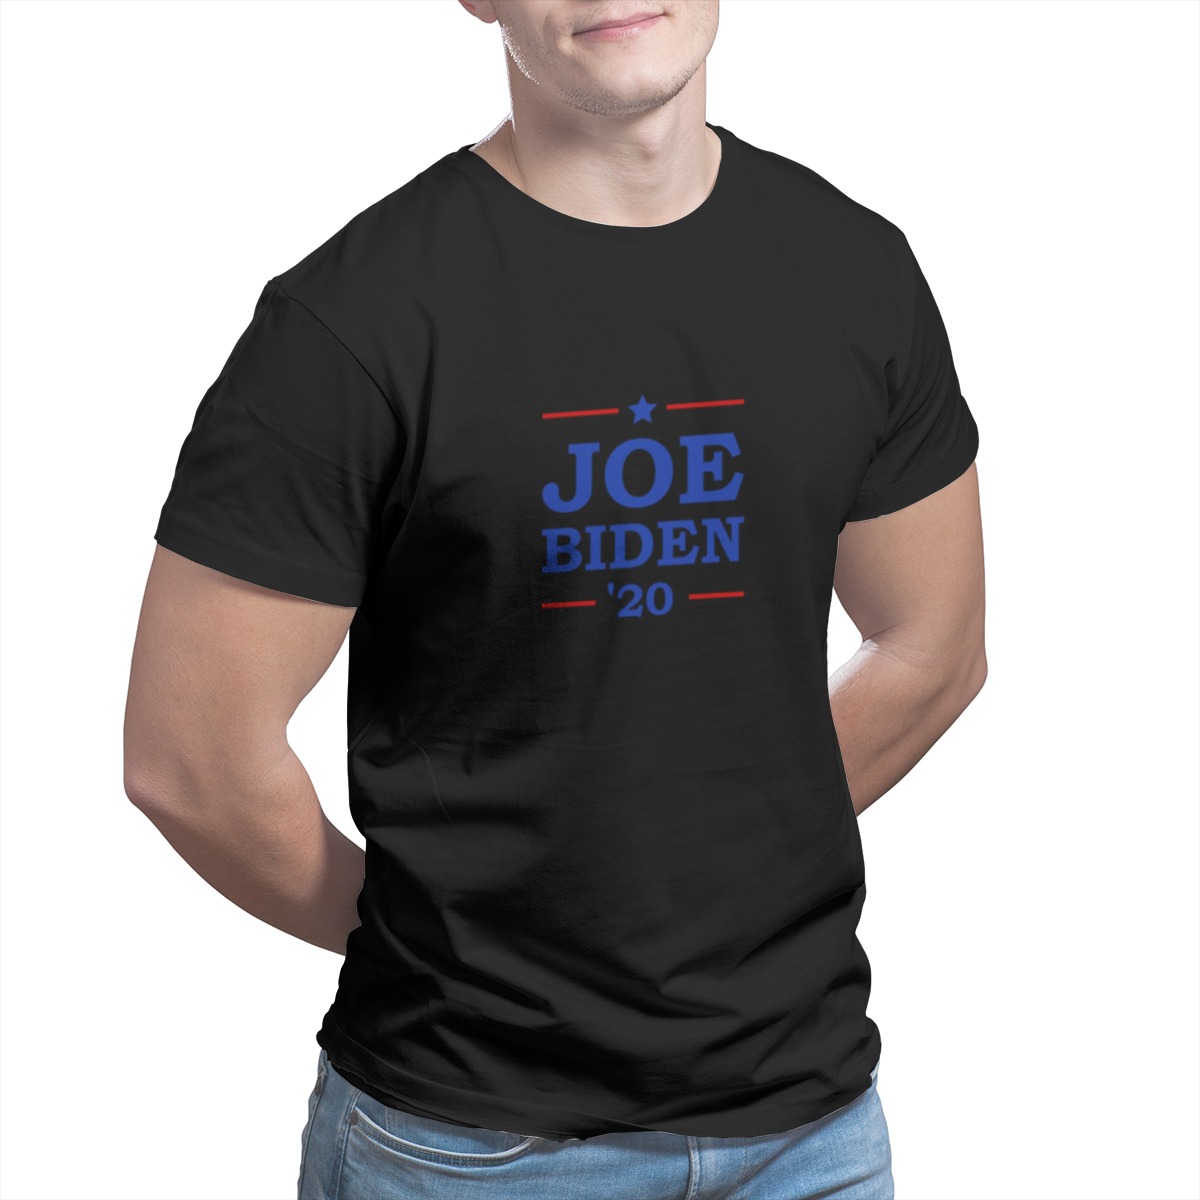 Joe Biden 2020 Men's T Shirt Novelty Tops Bitumen Bike Life Tees Clothes Cotton Printed T-Shirt Plus Size Tshirts 3290